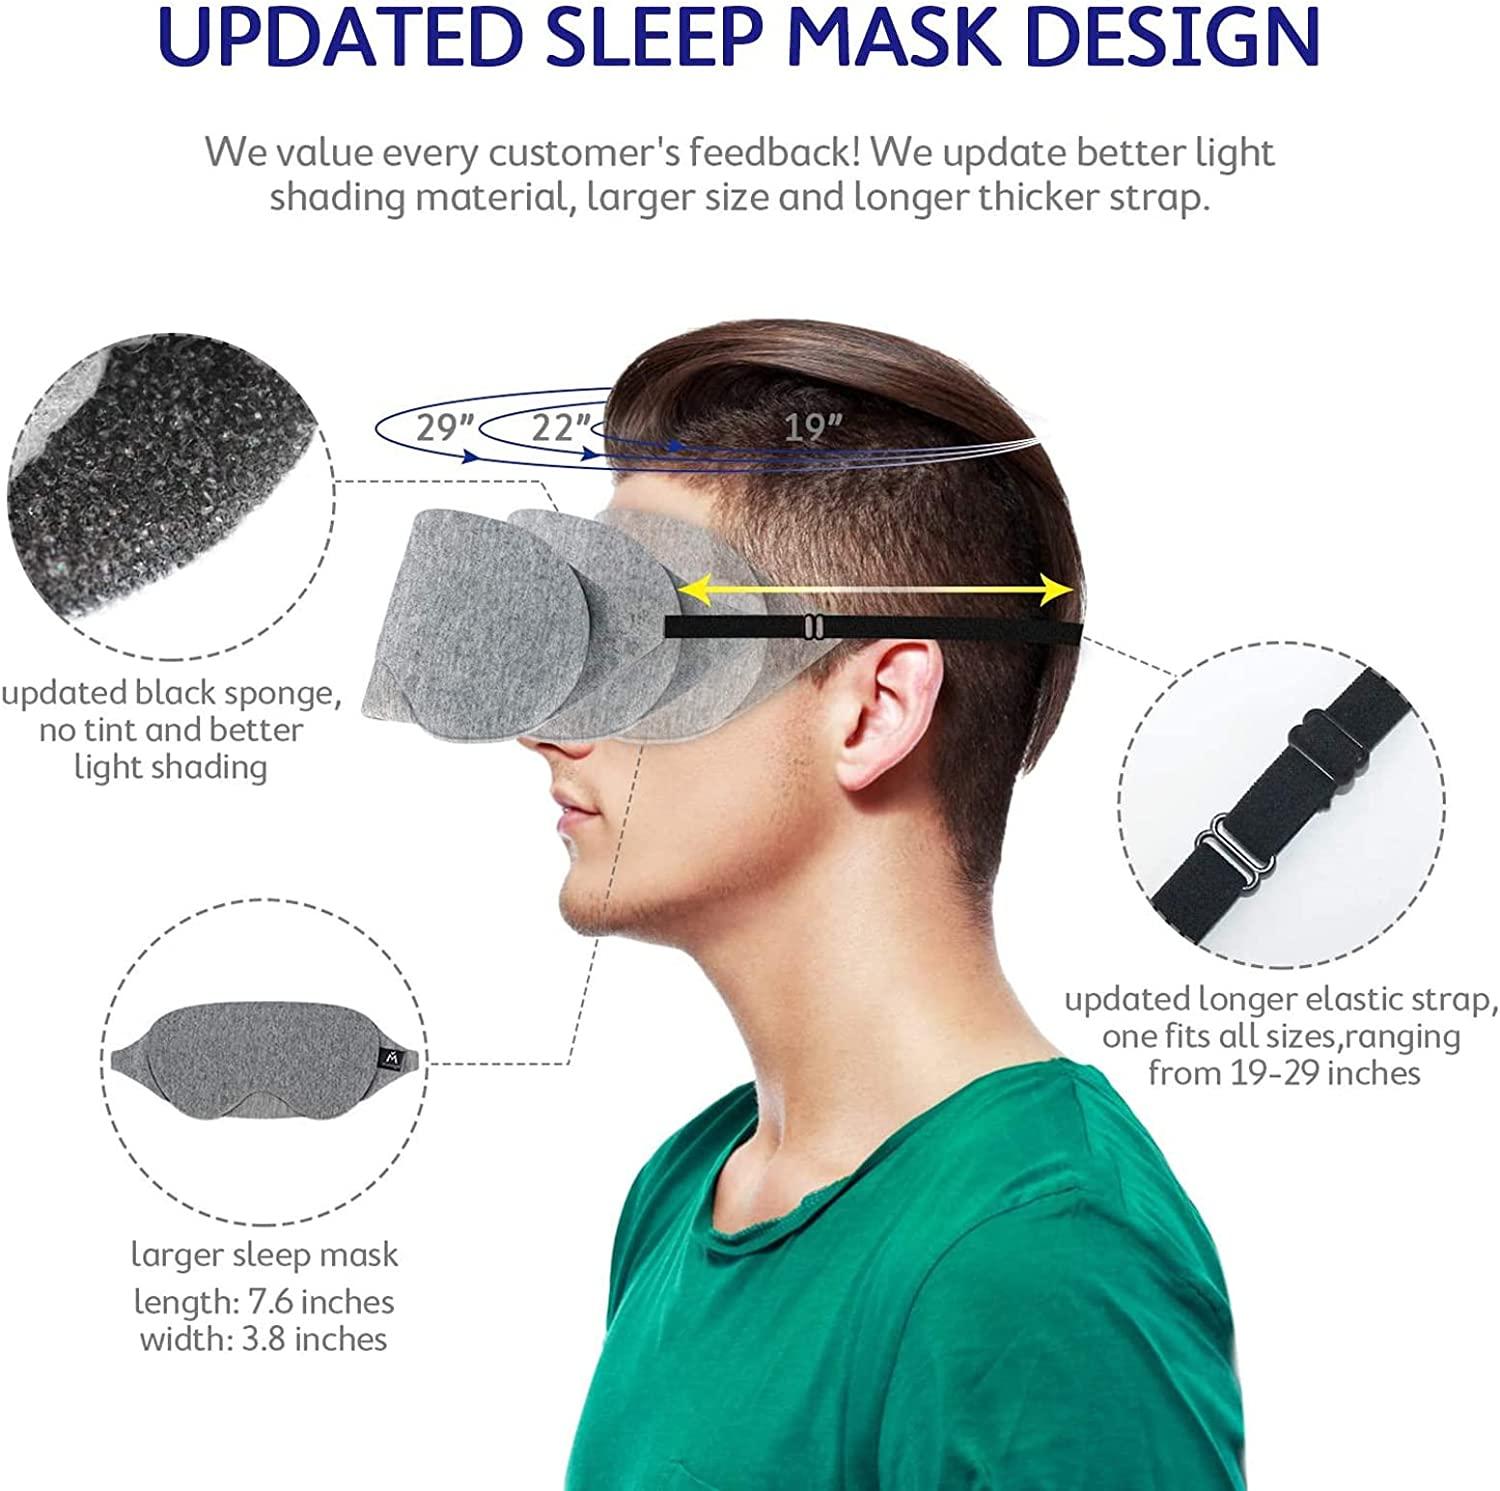 mavogel Cotton Sleep Eye Mask - Updated Design Light Blocking Sleep Mask,  Soft and Comfortable Night Eye Mask for Men Women, Eye Blinder for Travel/ Sleeping/Shift Work, Includes Travel Pouch, Grey : 